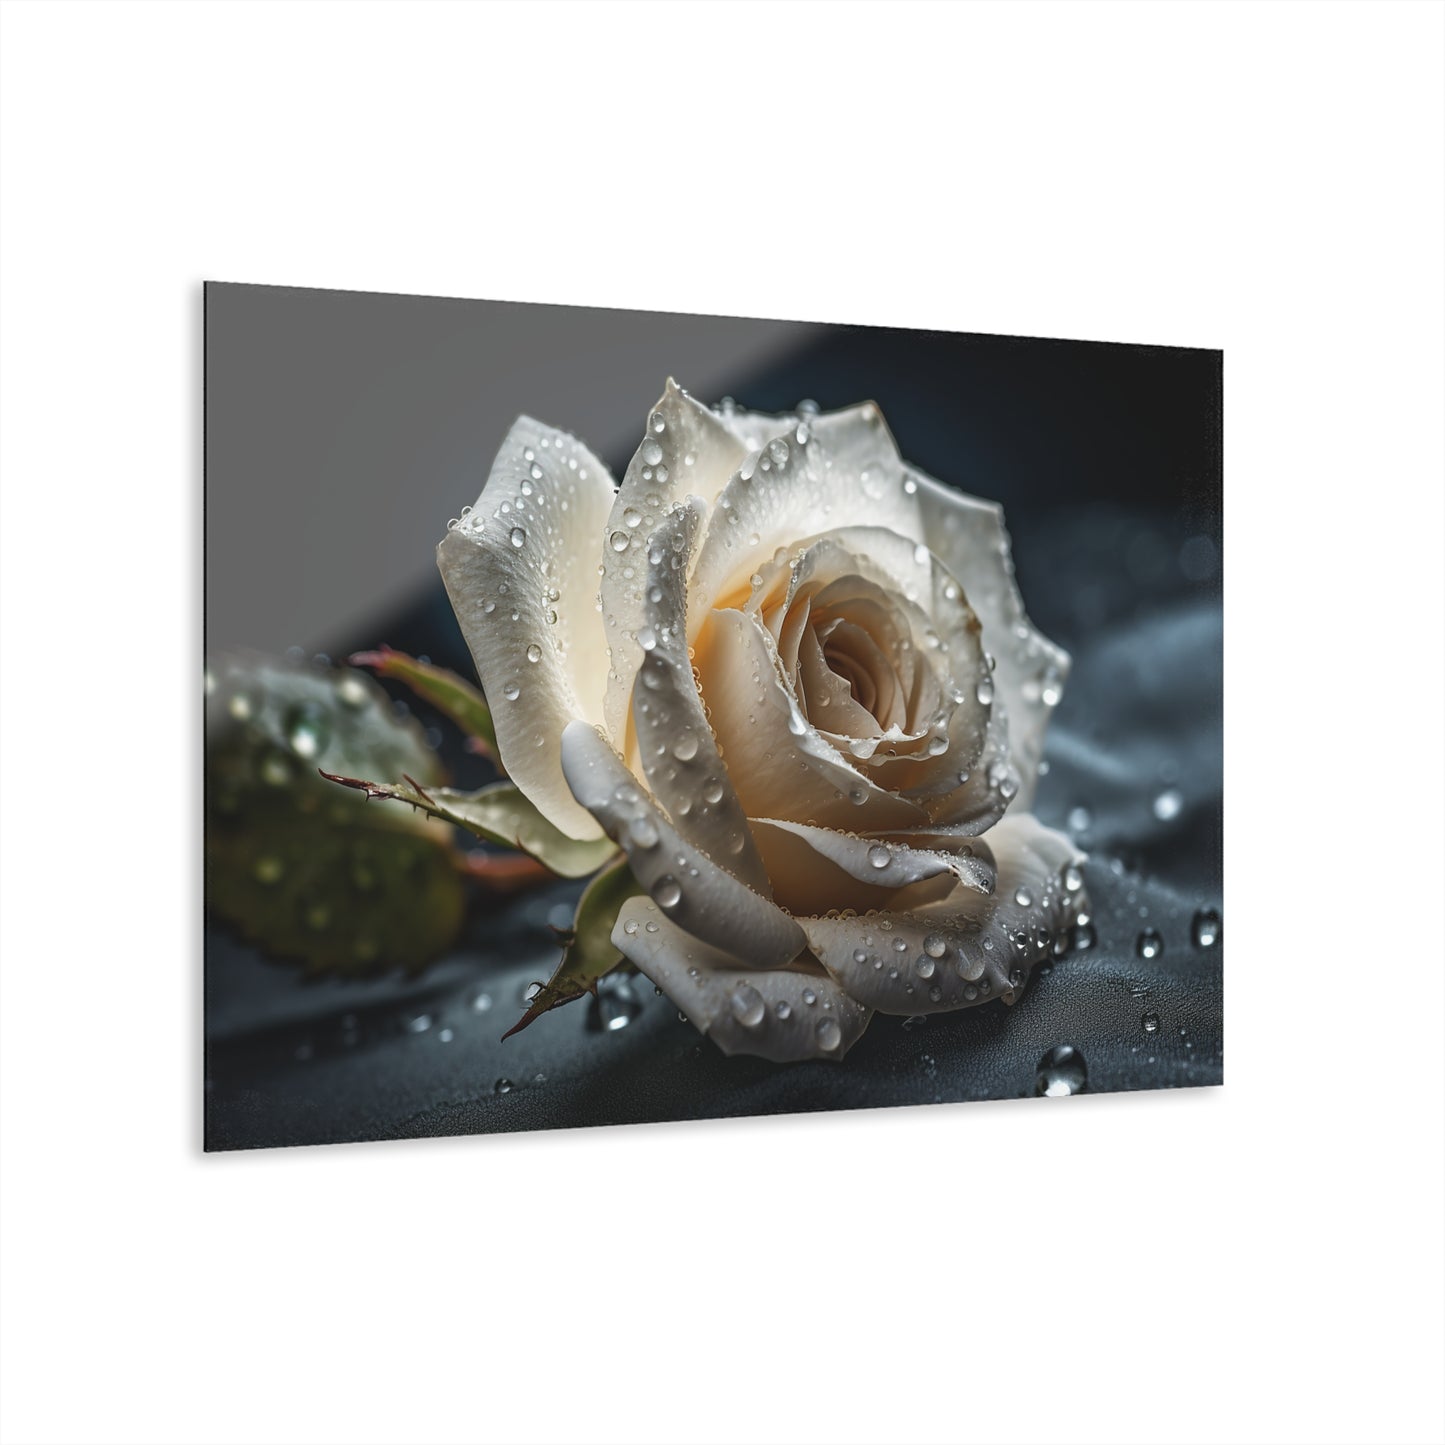 Acrylic Prints - Single White Rose